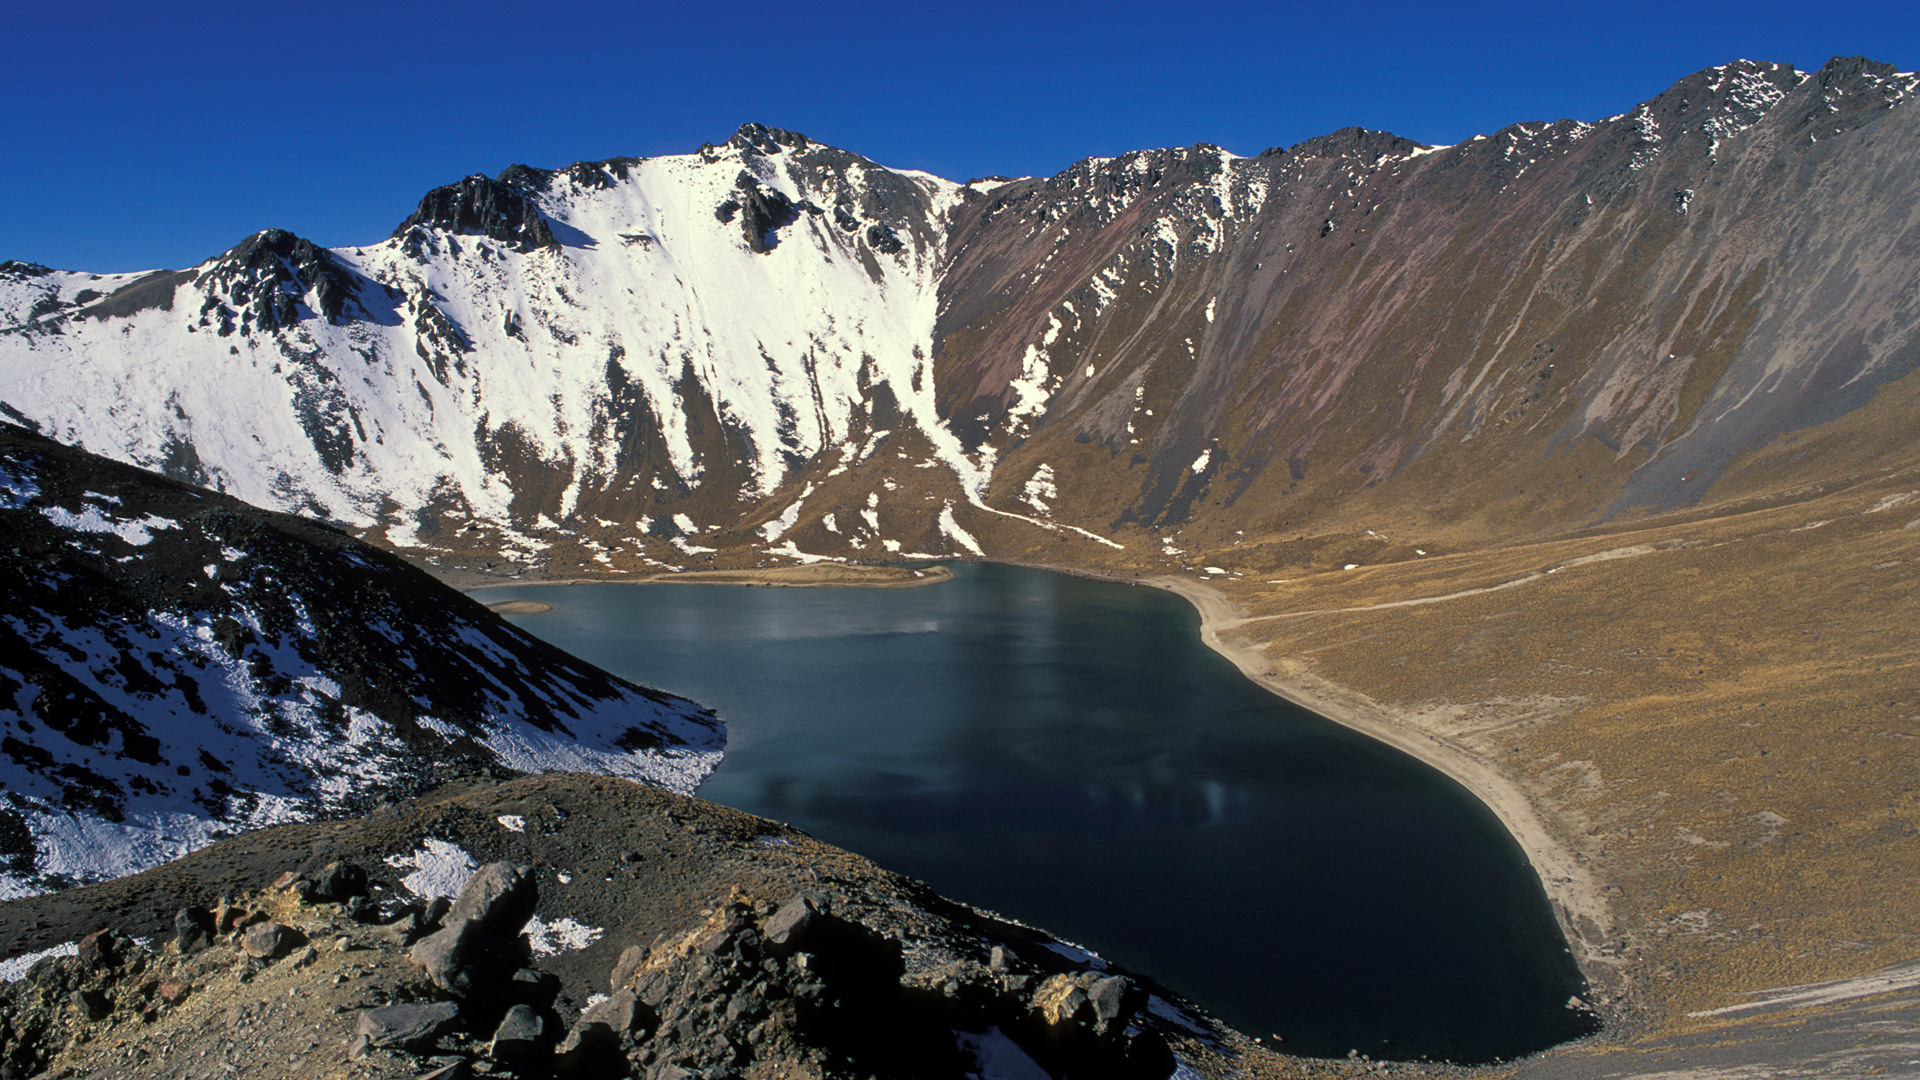 Aprueba Semarnat tala en el Nevado de Toluca